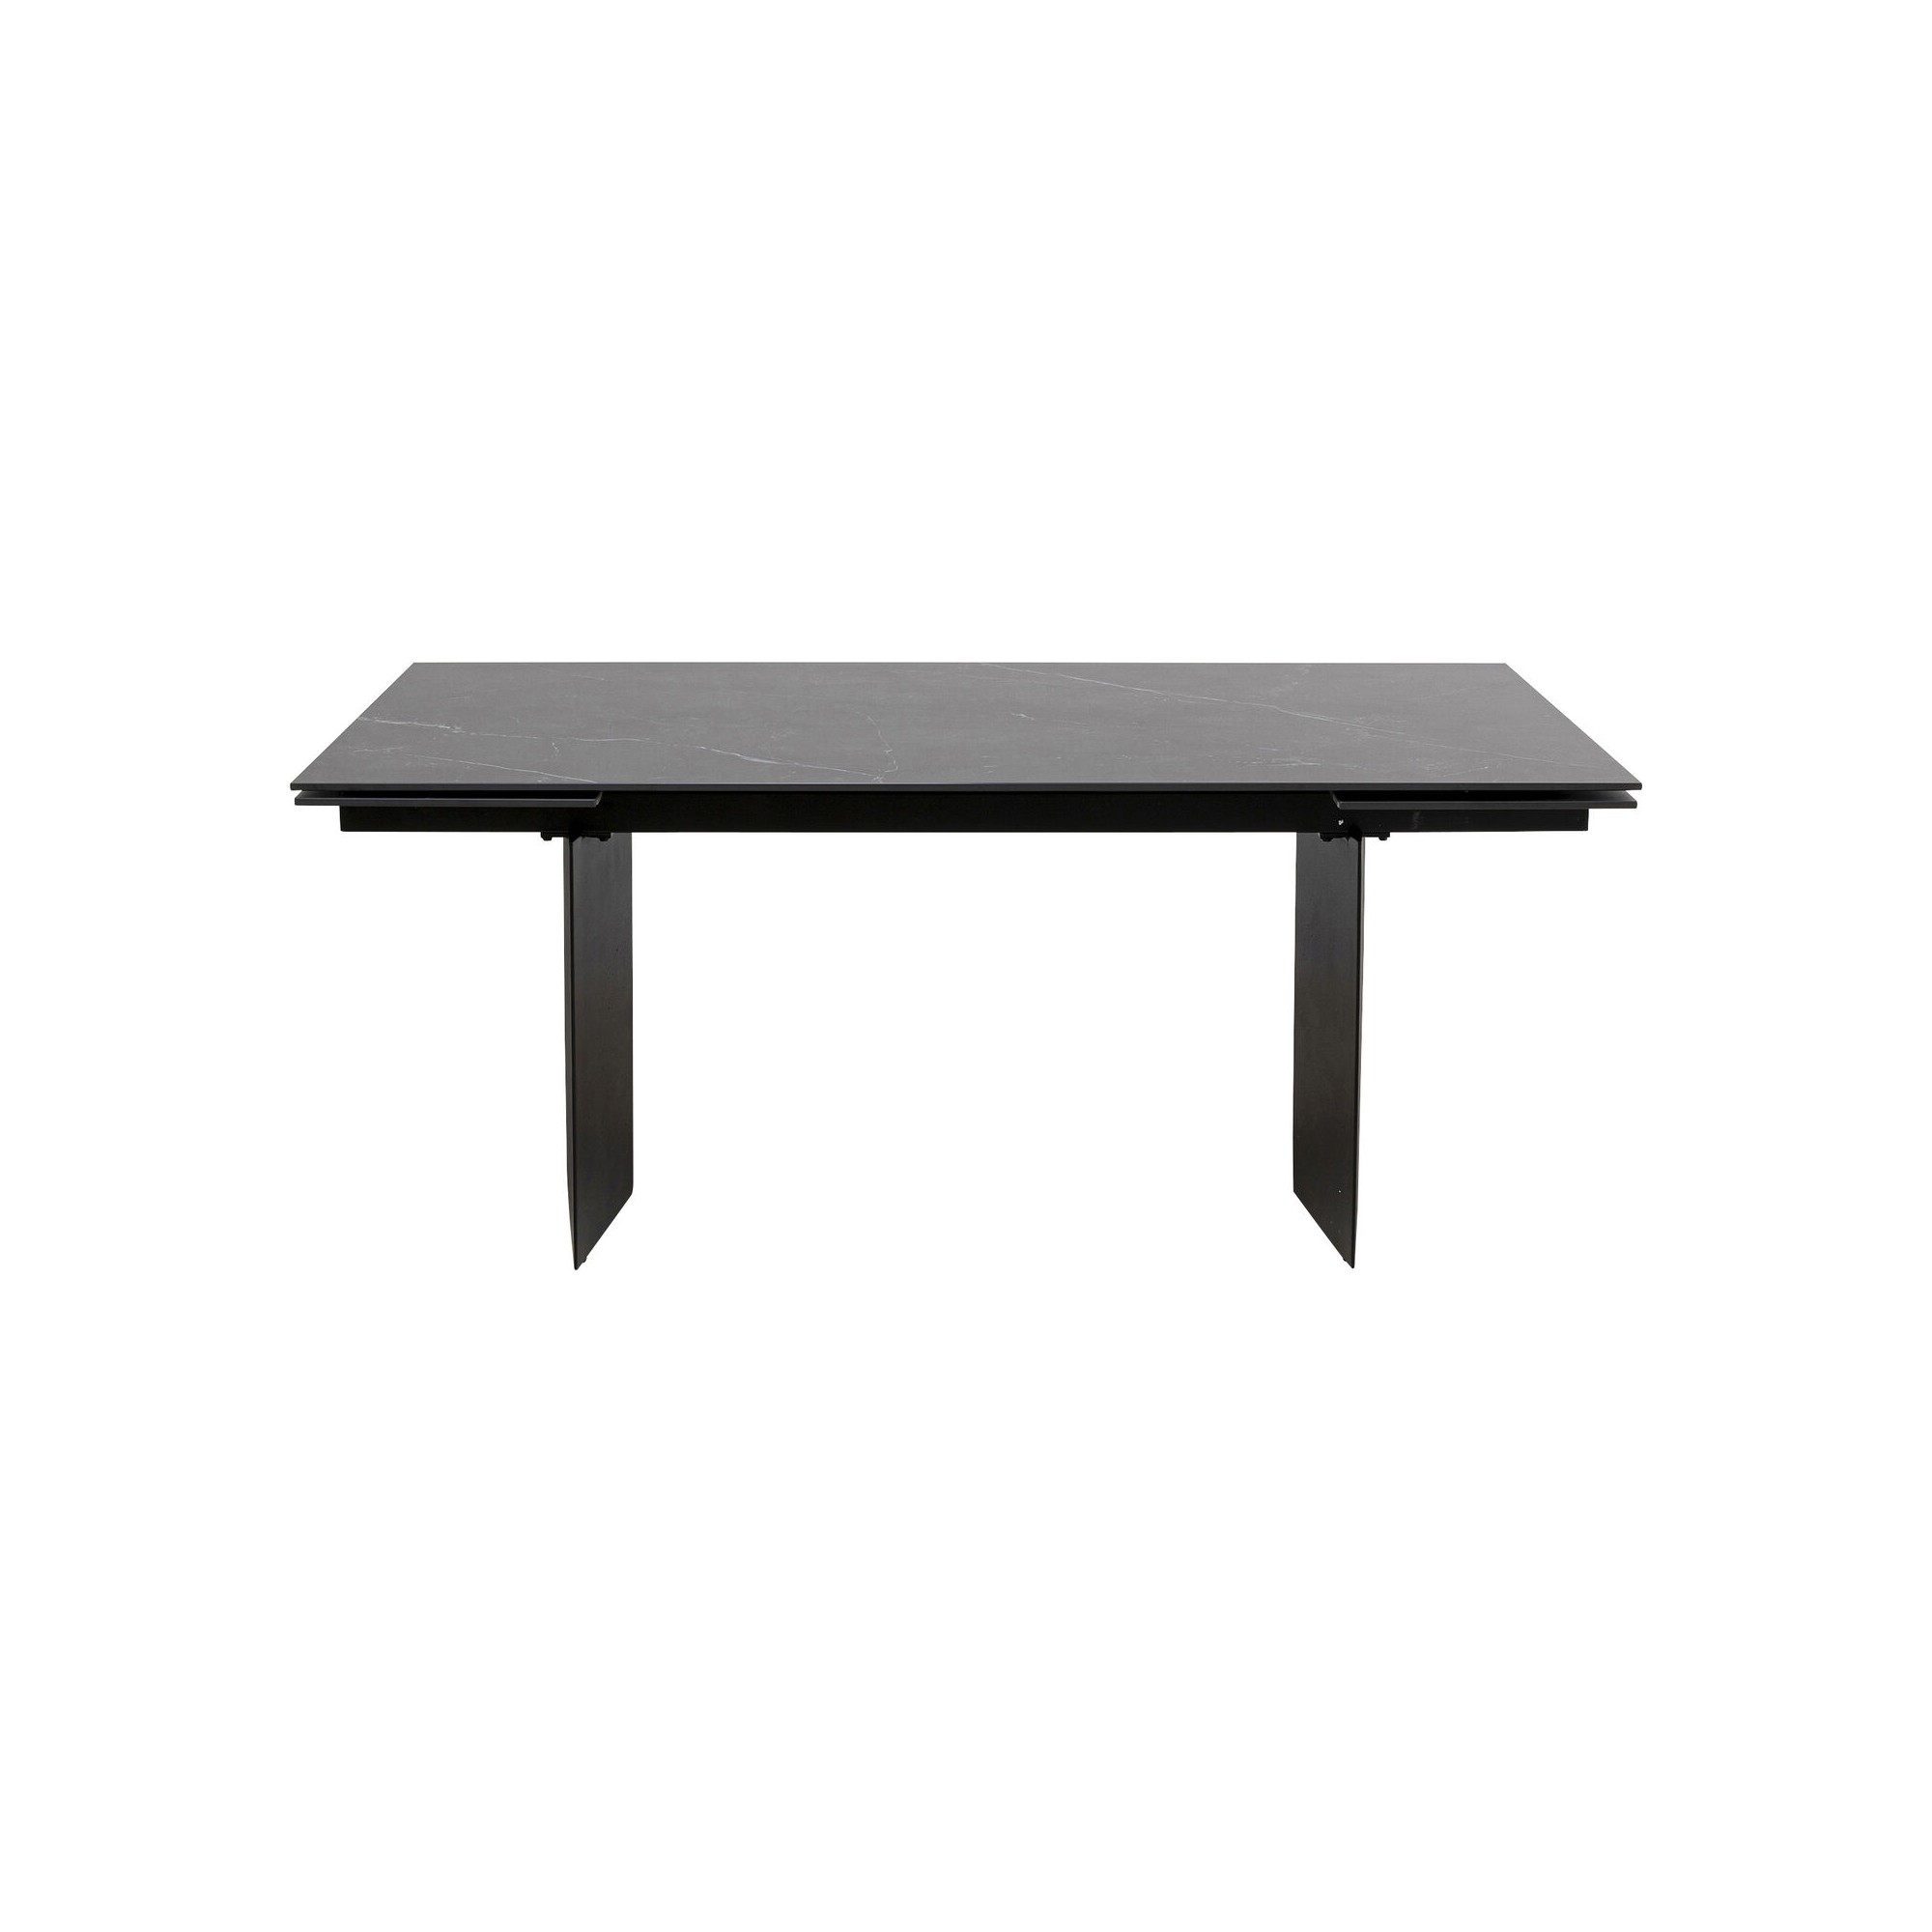 Extension Table Novel 180x90cm black Kare Design